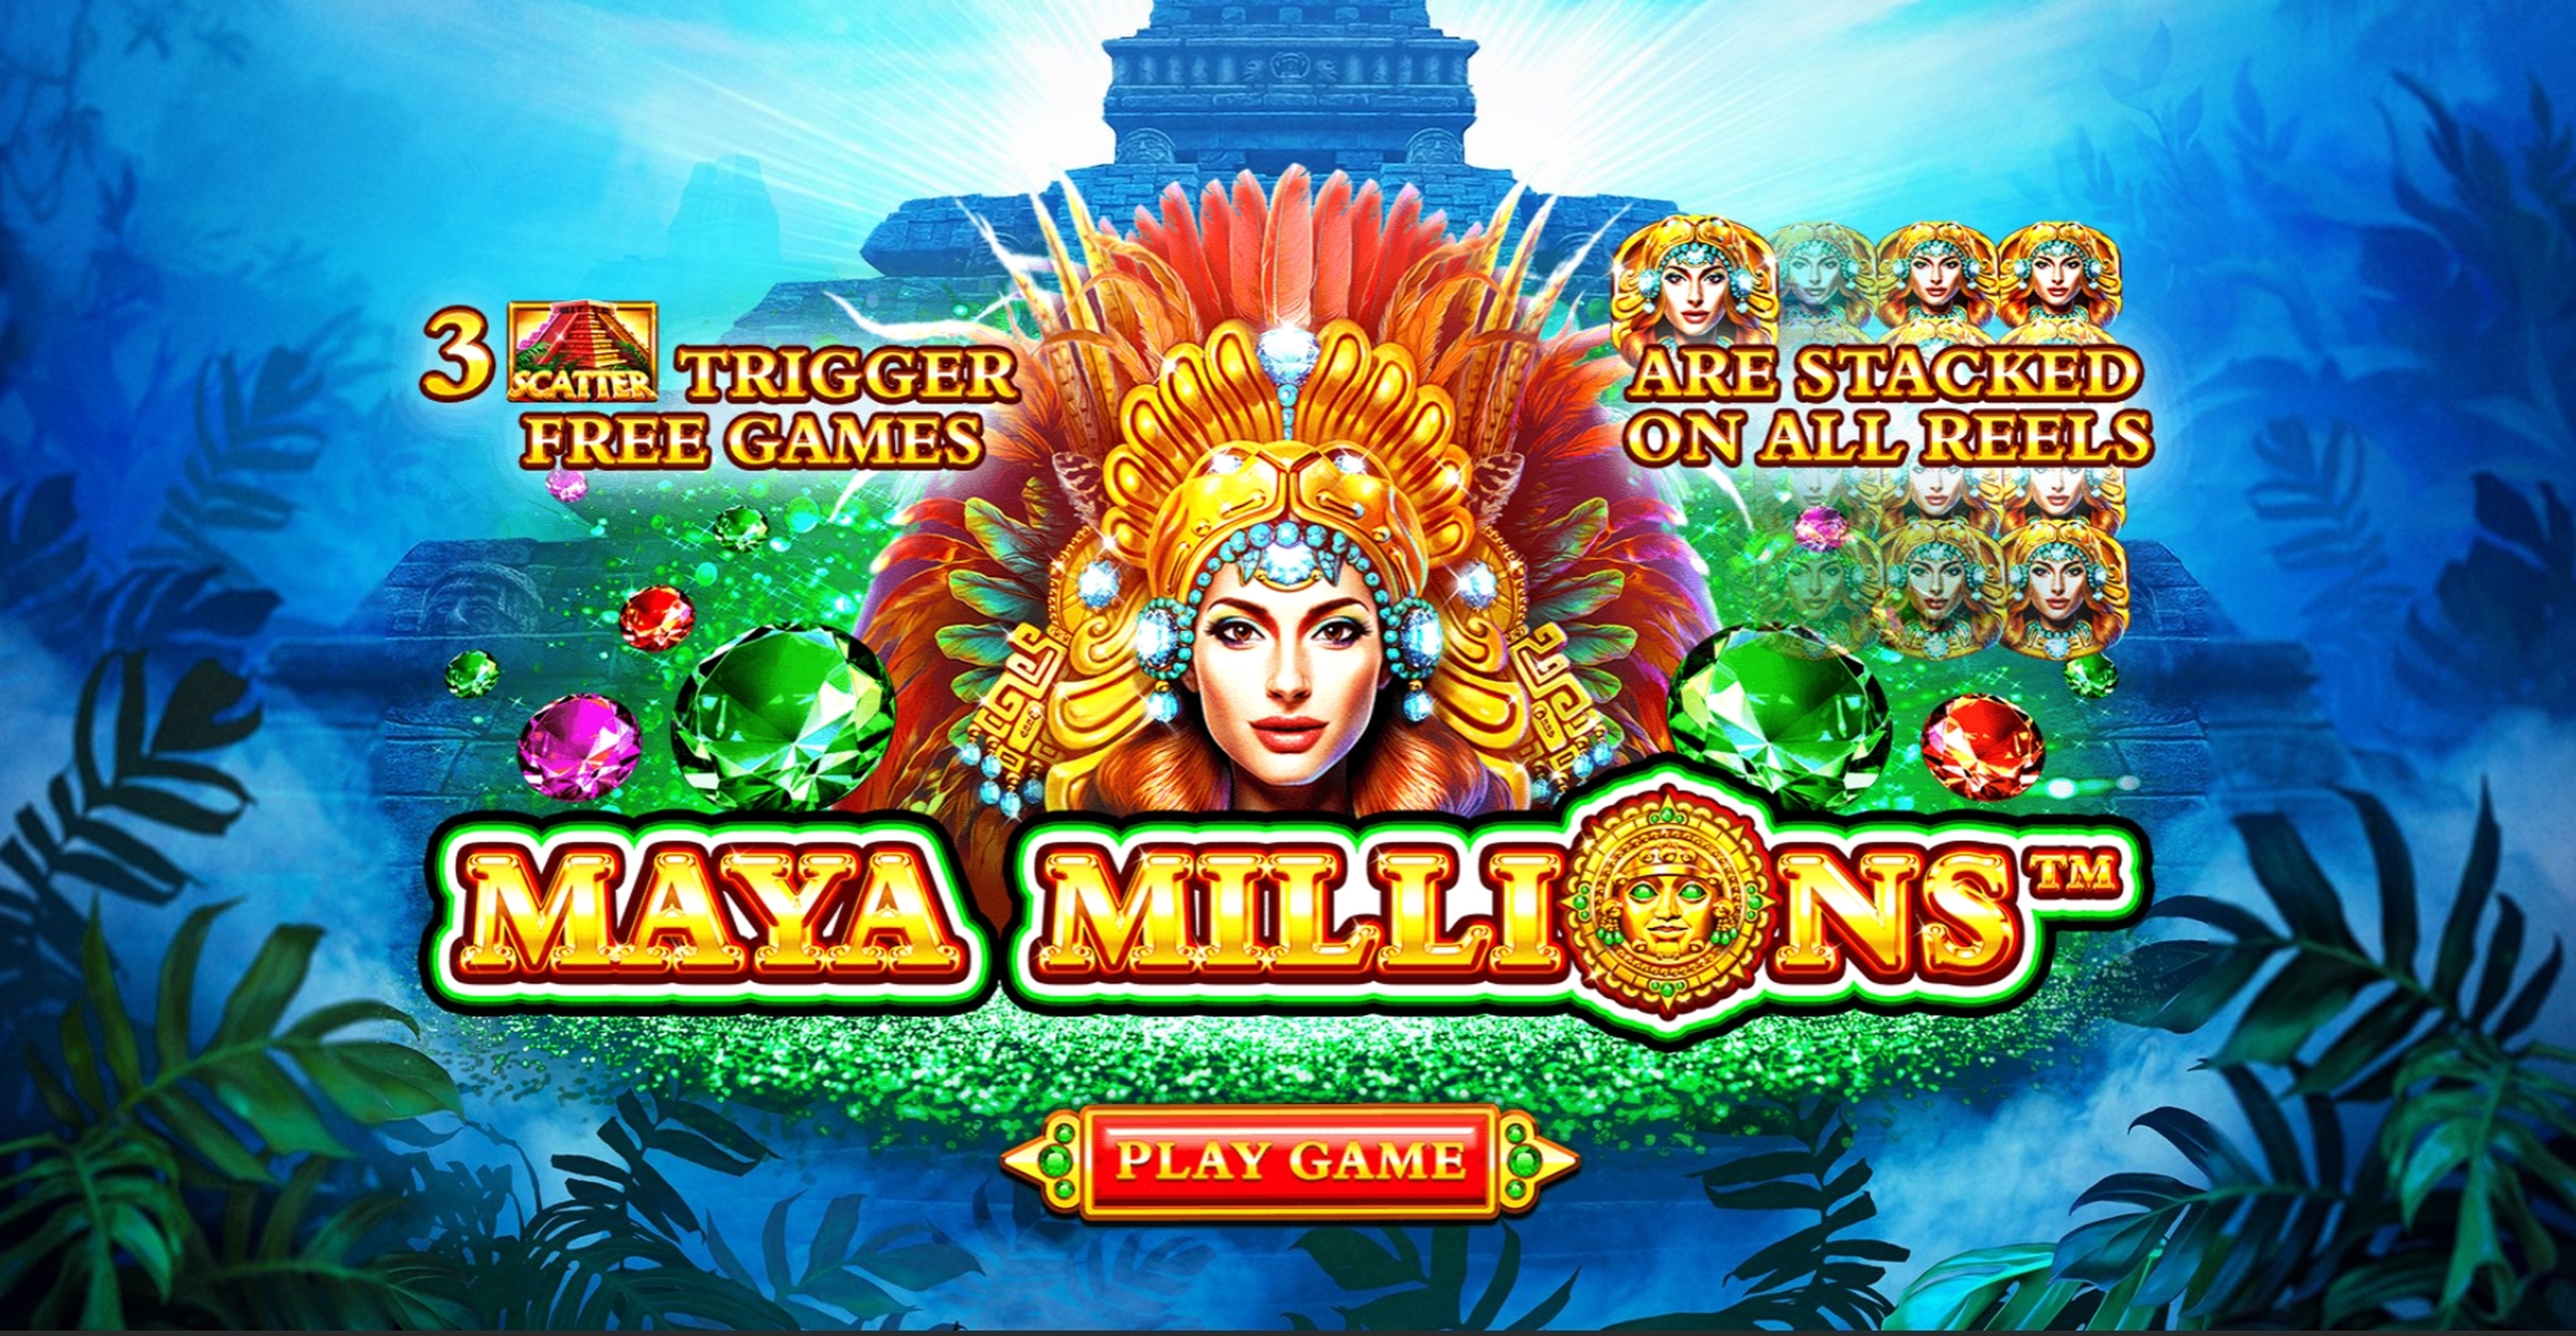 Play Maya Millions Free Casino Slot Game by Skywind